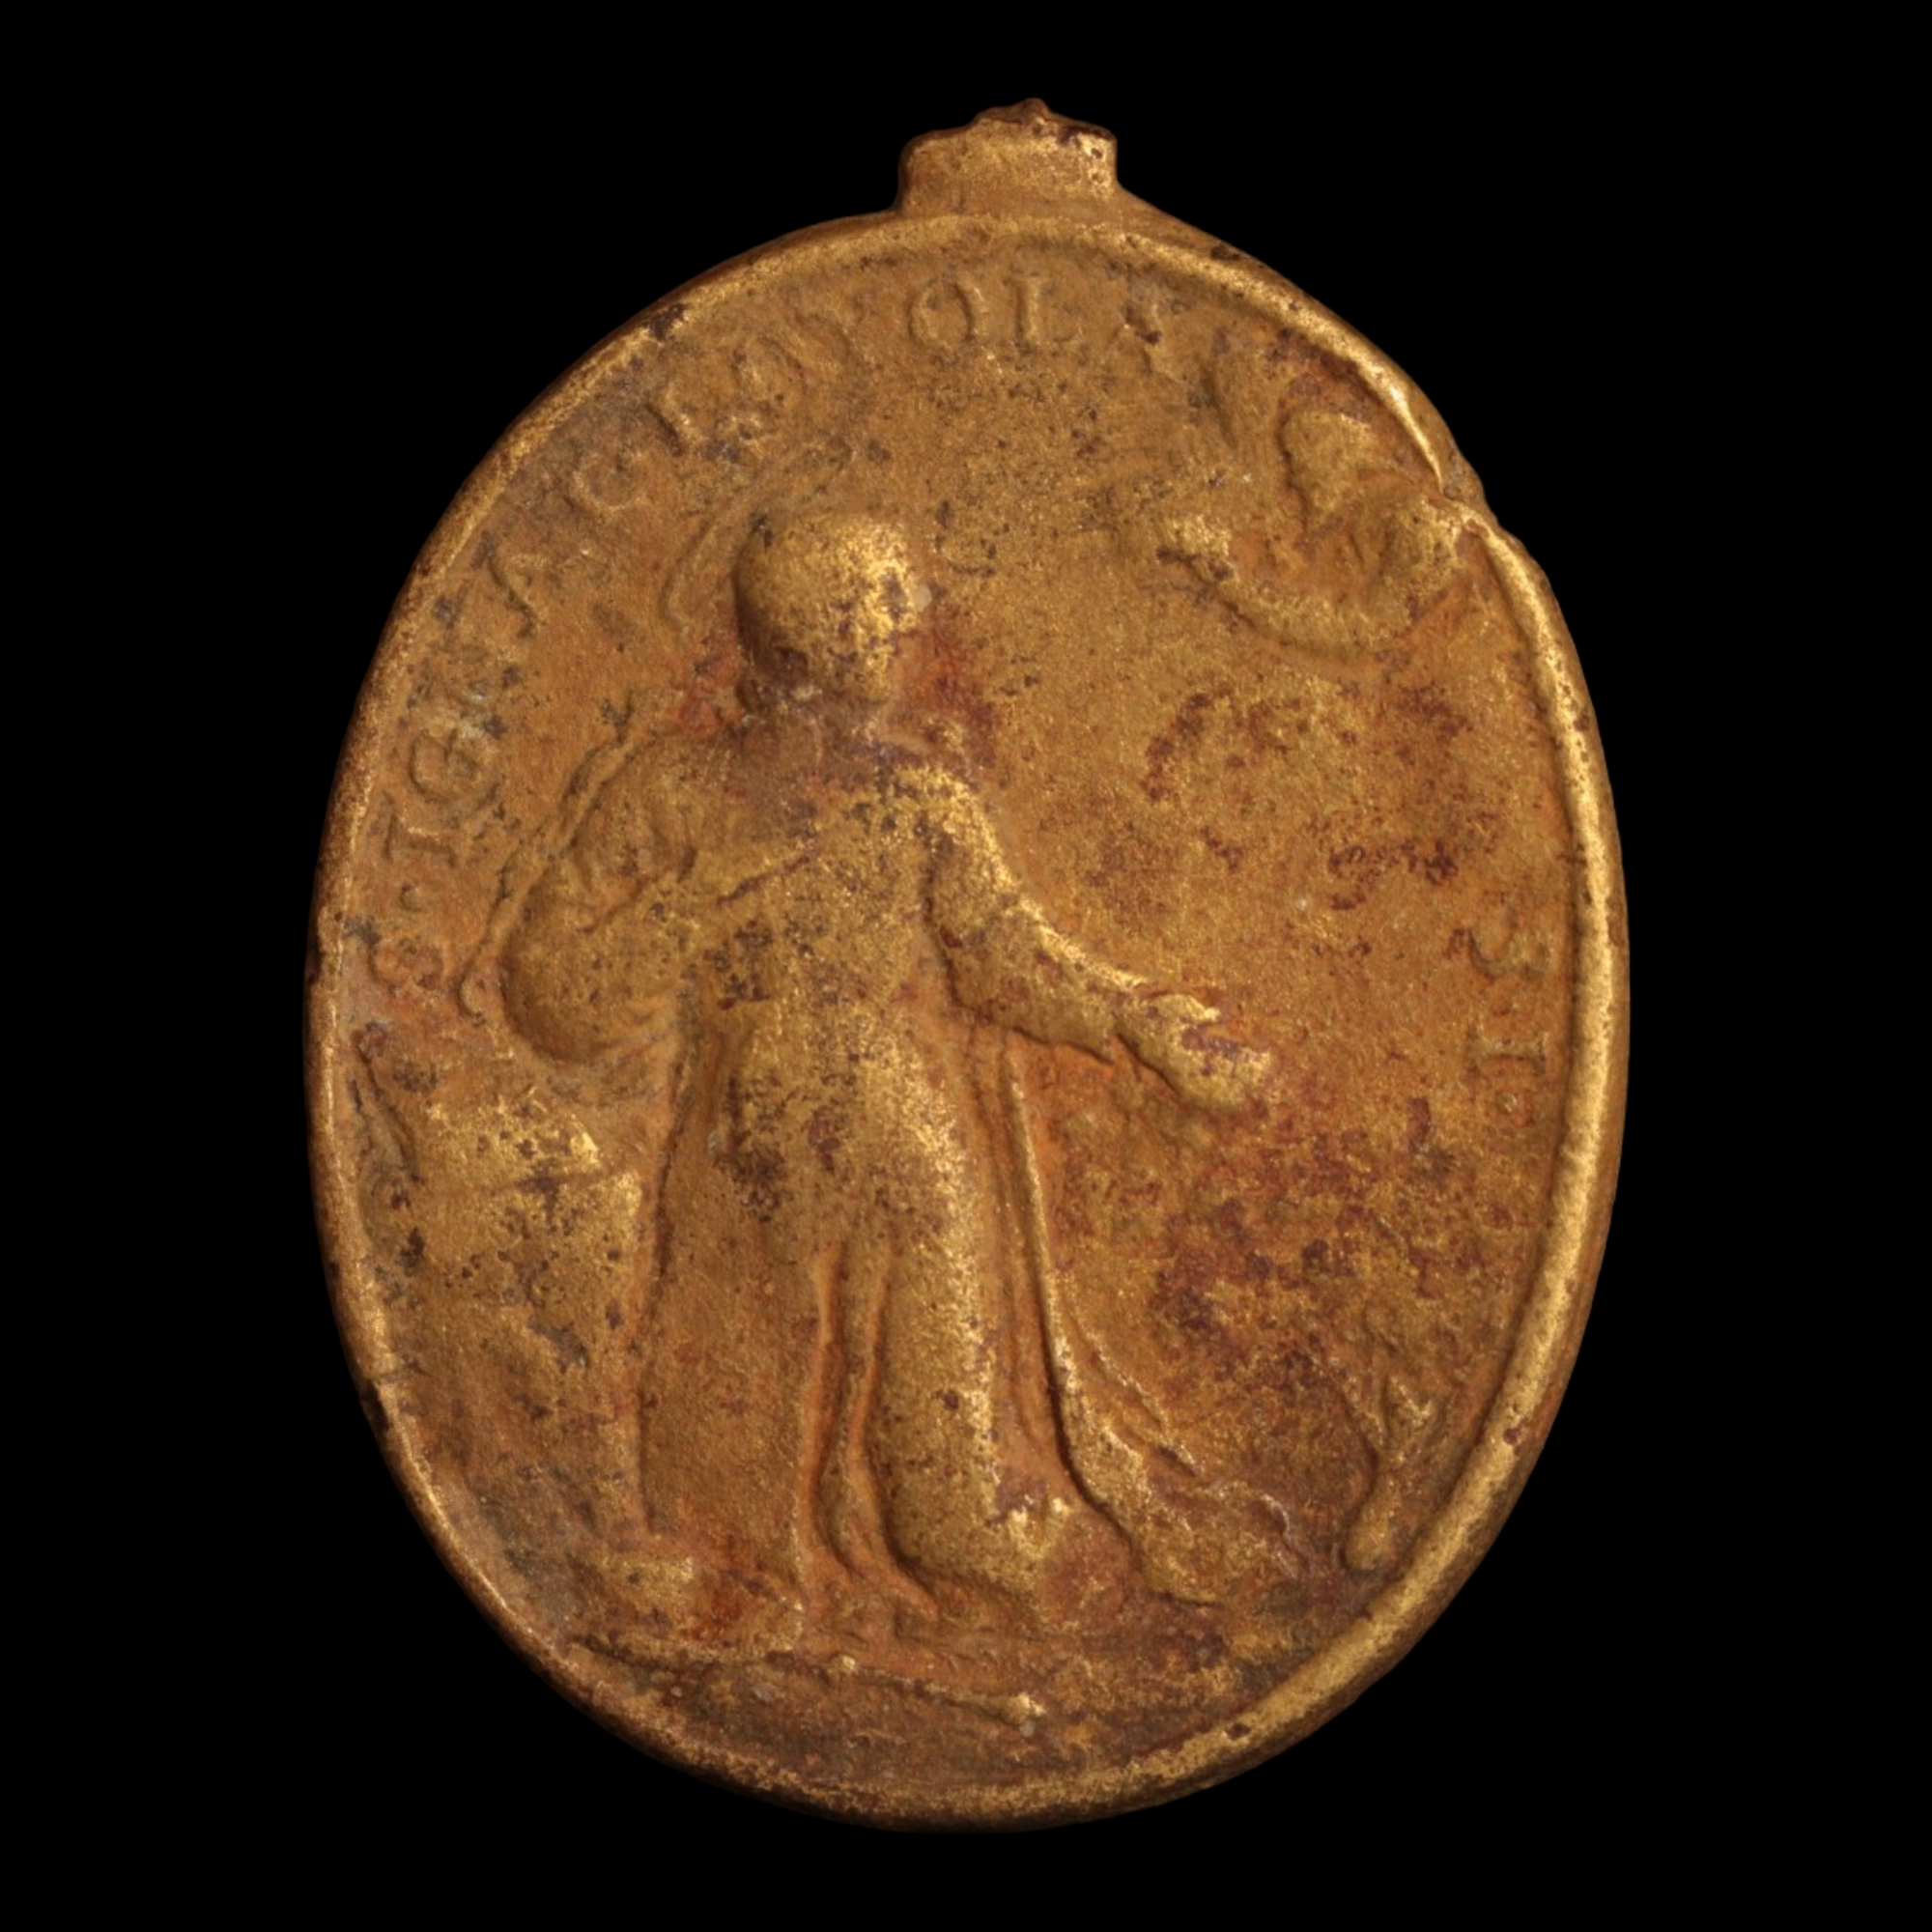 Religious Medal, Catholic Church, St. Francis of Borgia & St. Ignatius of Loyola, 42mm - 1500s to 1700s - Spanish Empire